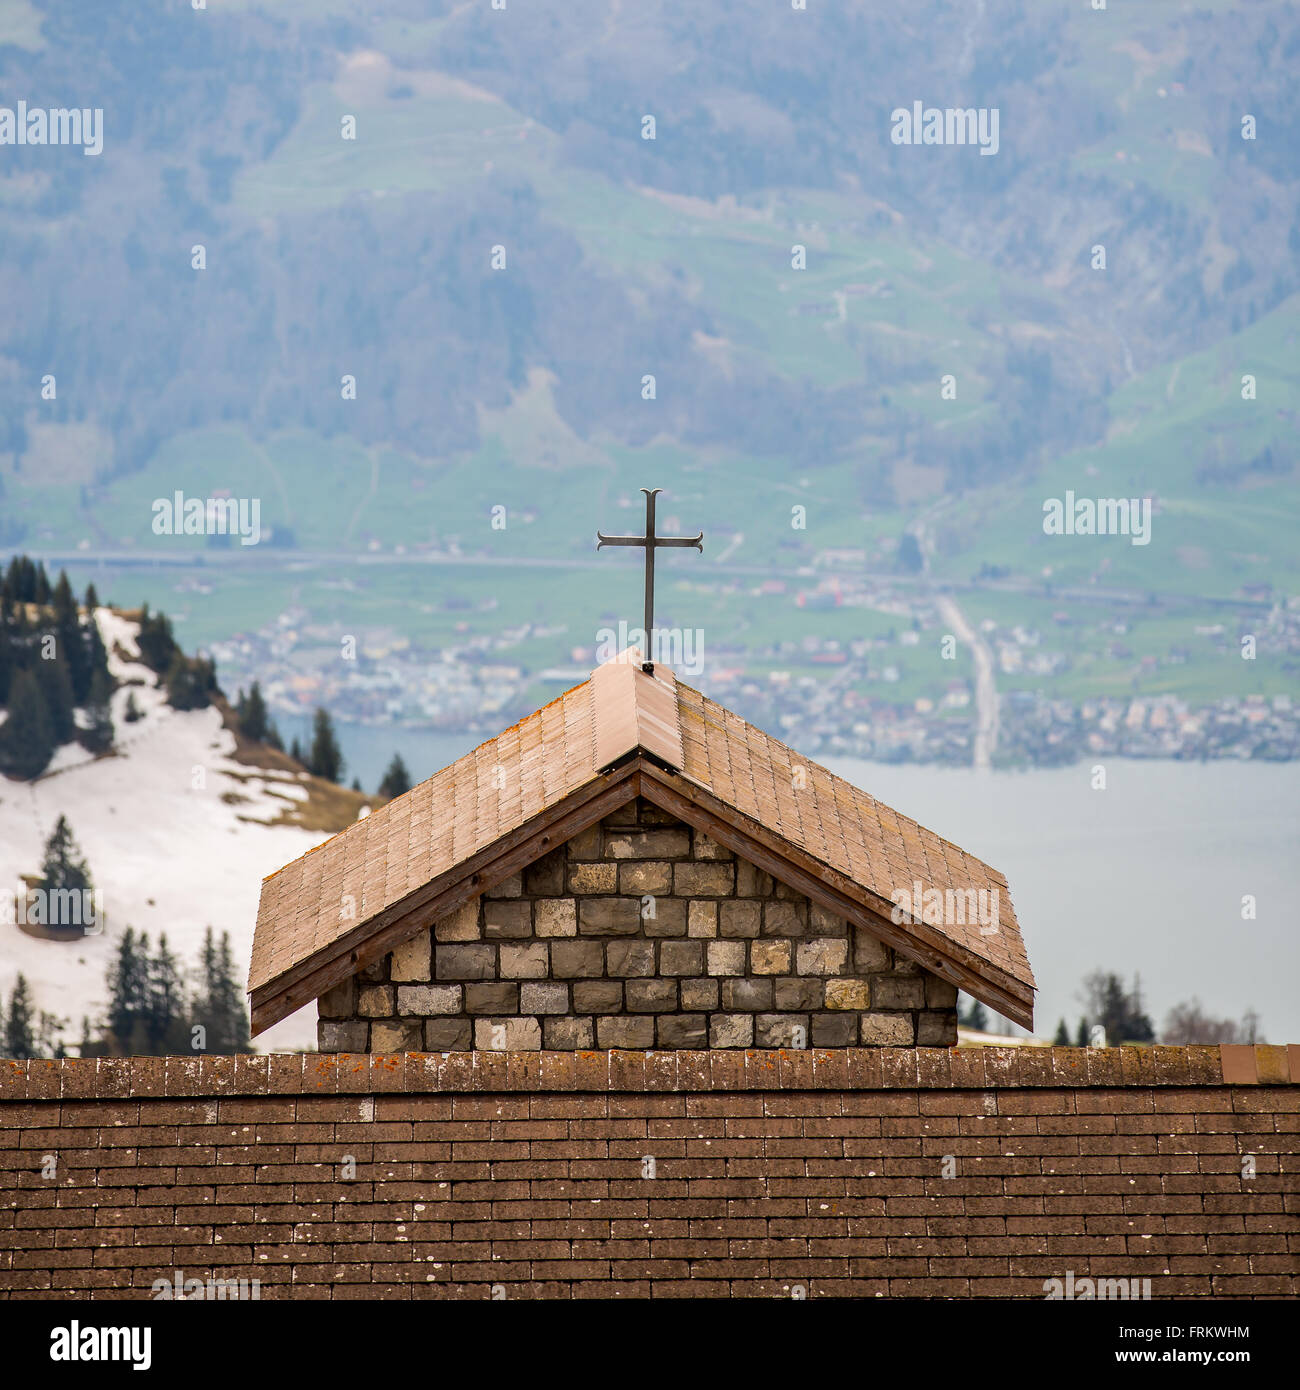 Cross on Roof at Mount. Rigi - Arth, Switzerland Stock Photo